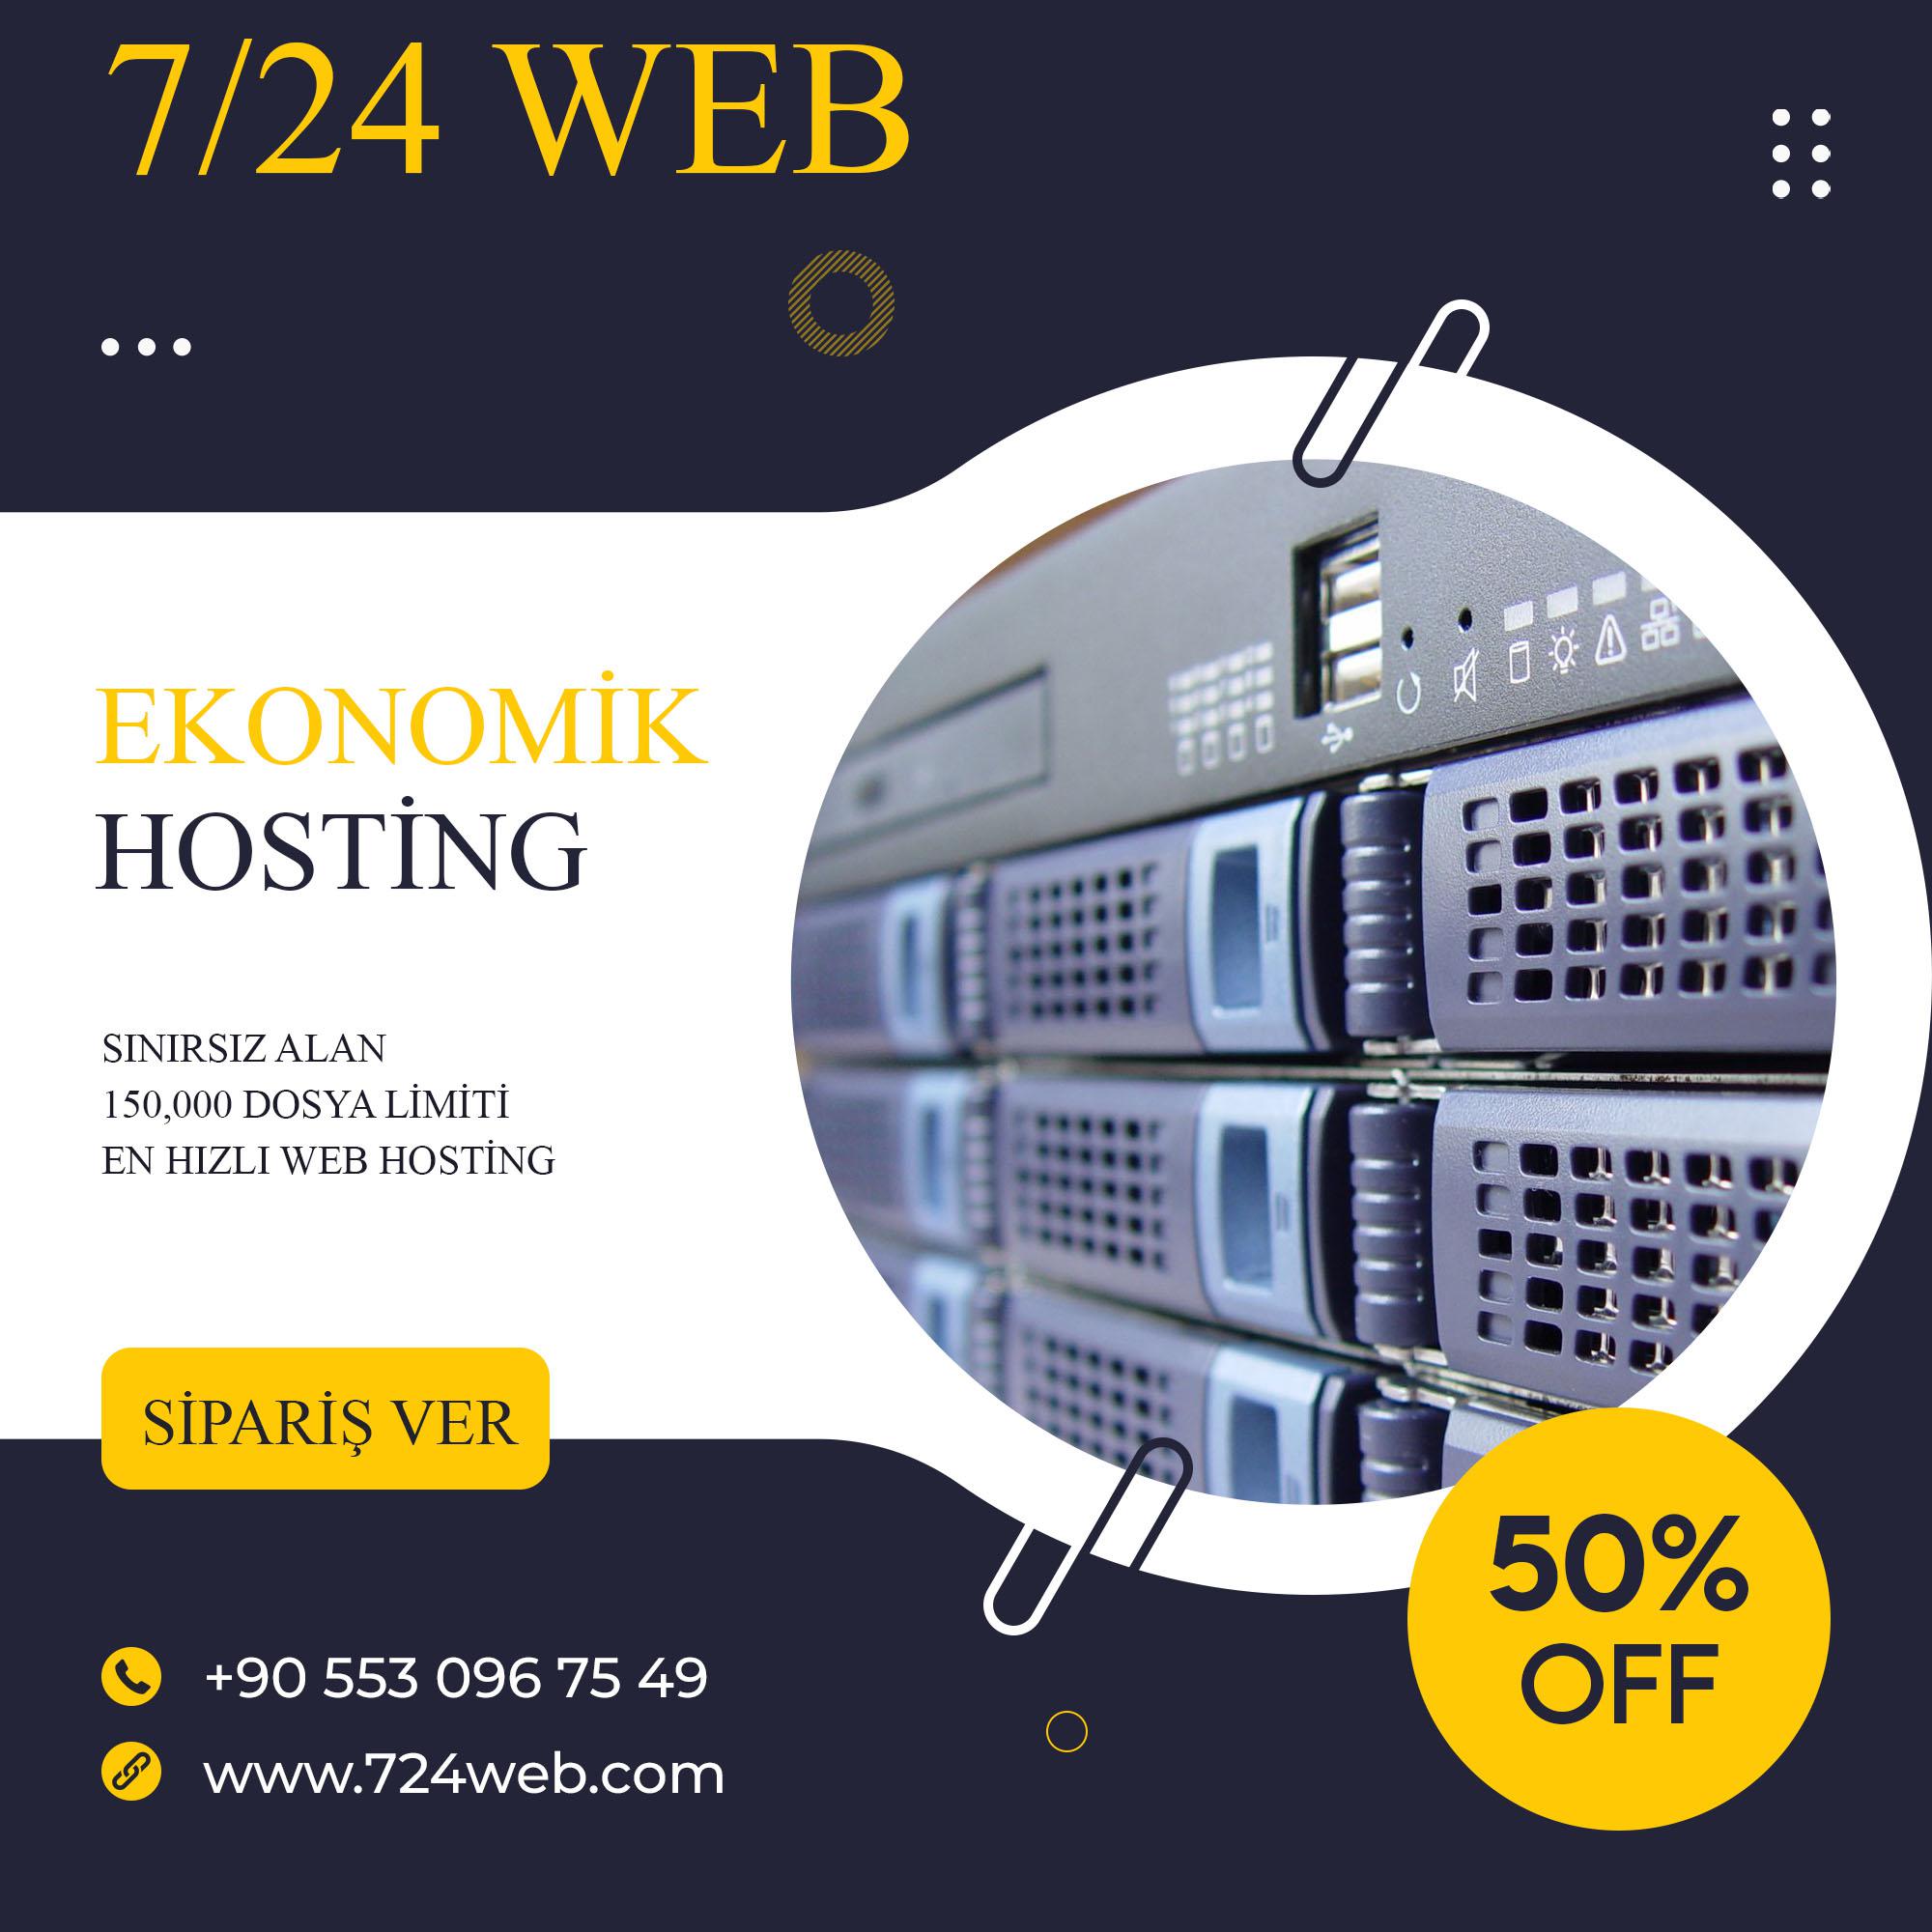 724 Web Hosting Service